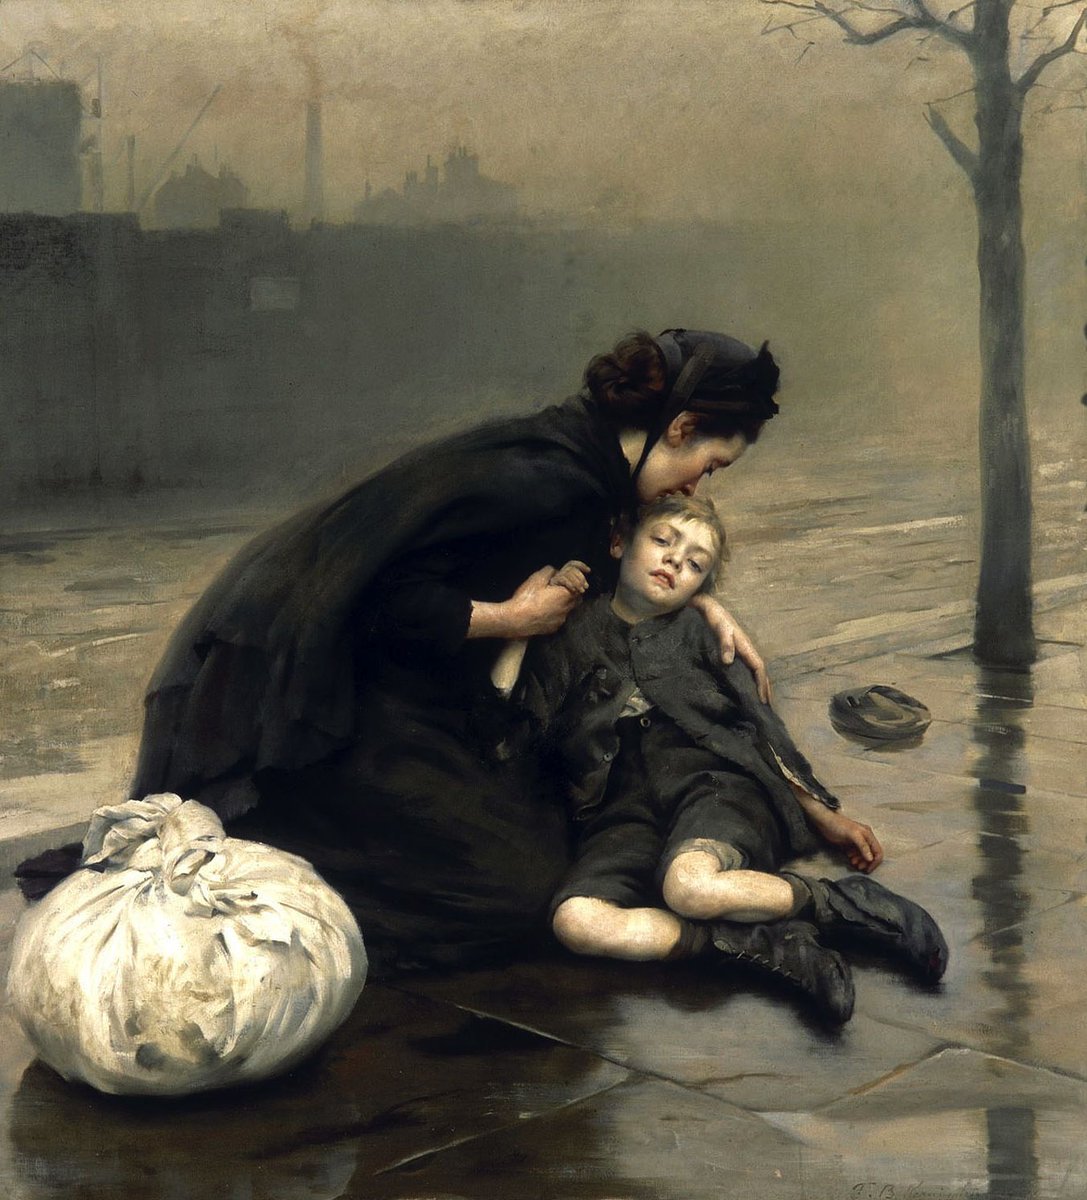 Homeless (1890) by Thomas Benjamin Kennington (English artist, lived 1856–1916). Sad times in #Victorian #London.